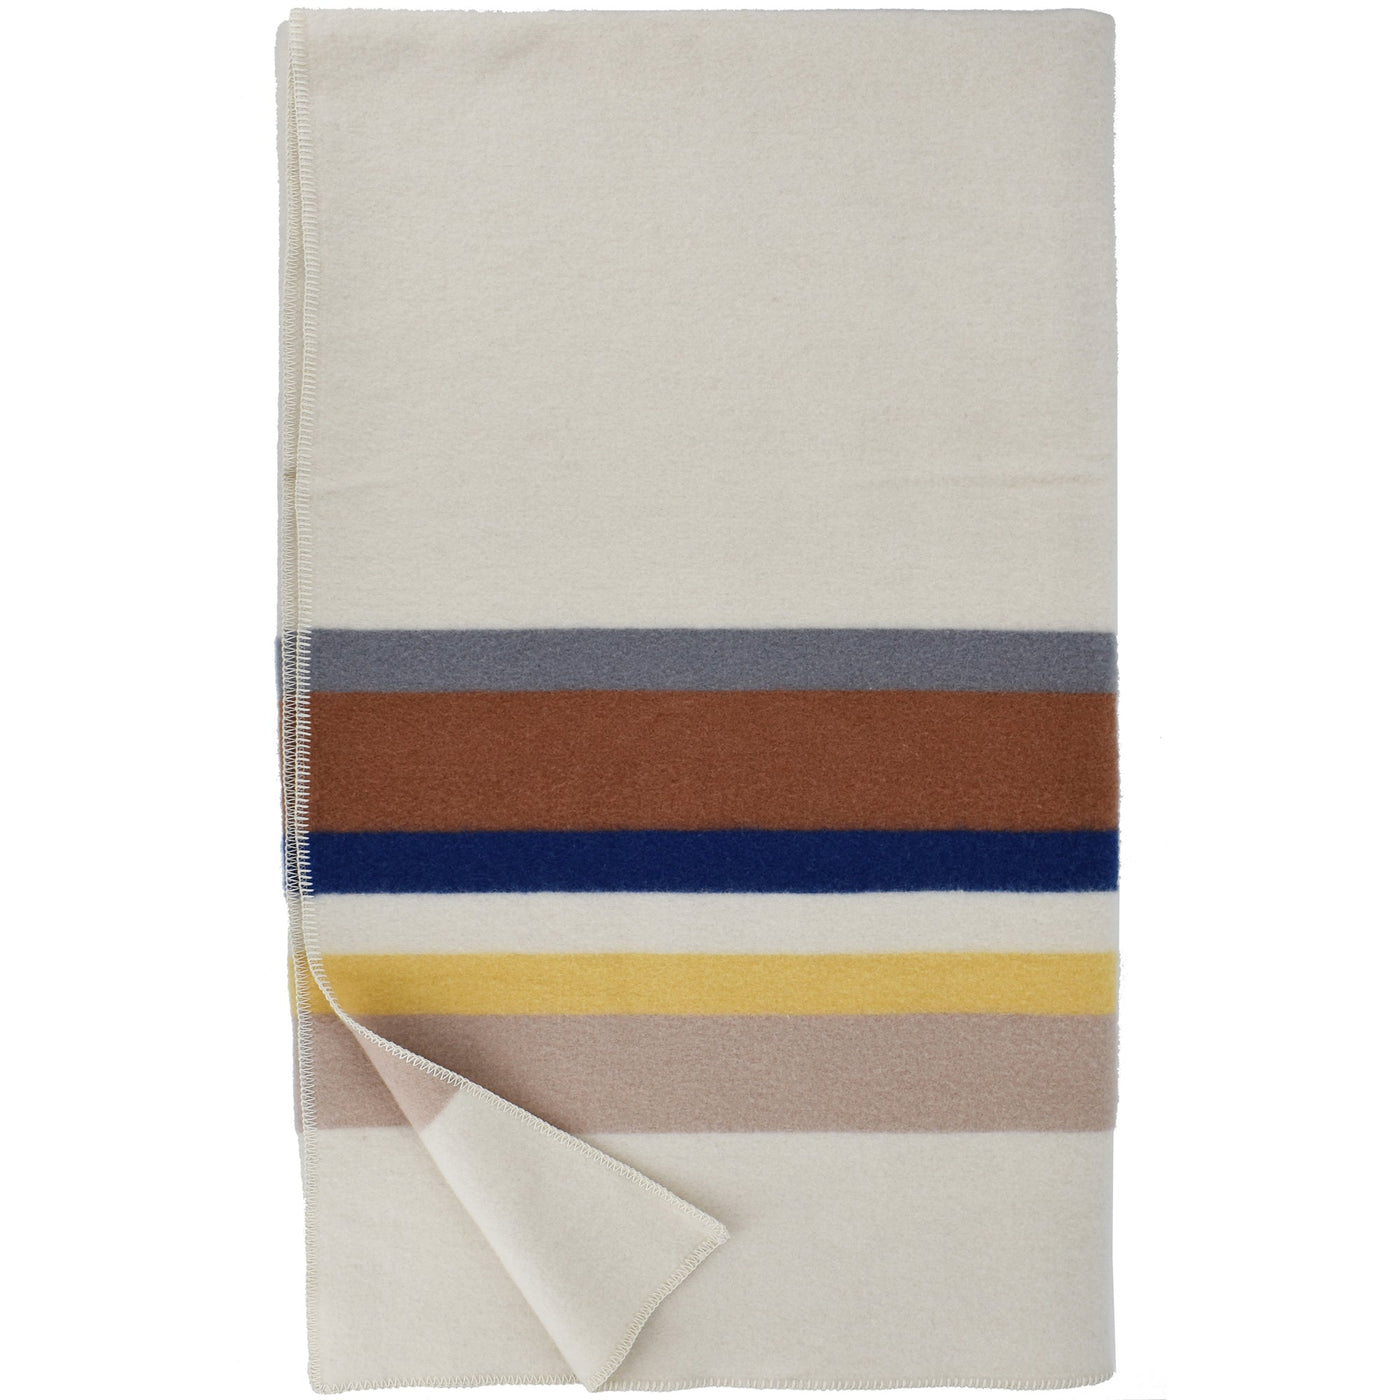 Imperfect Wool Blanket, Cream Dunes